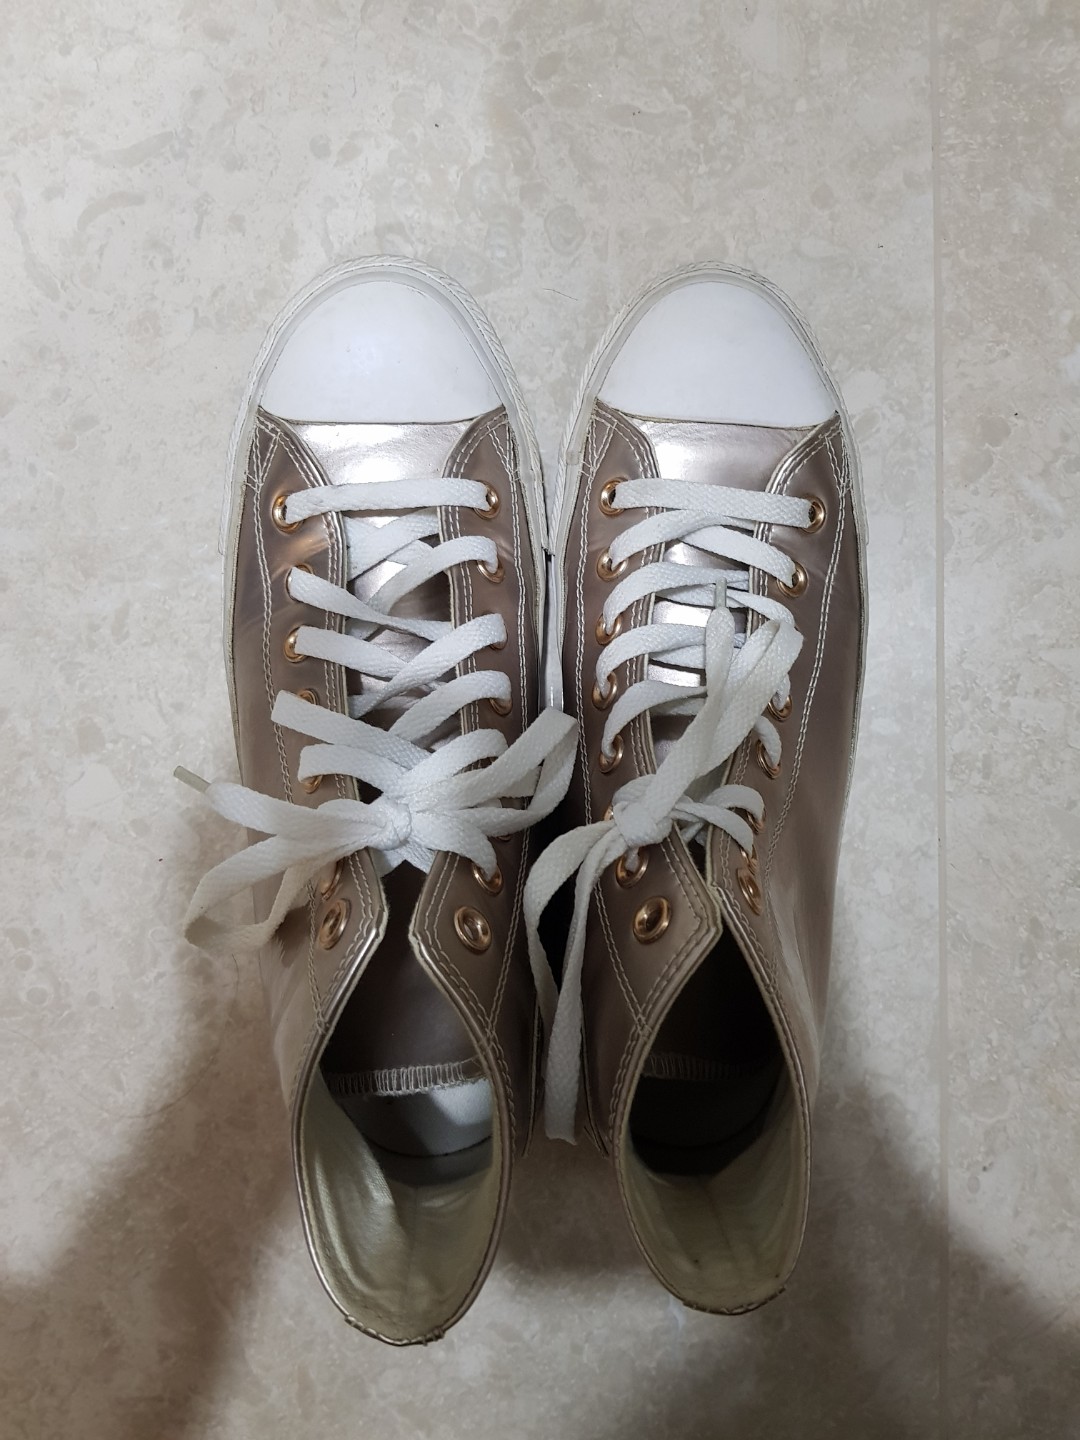 silver converse shoes